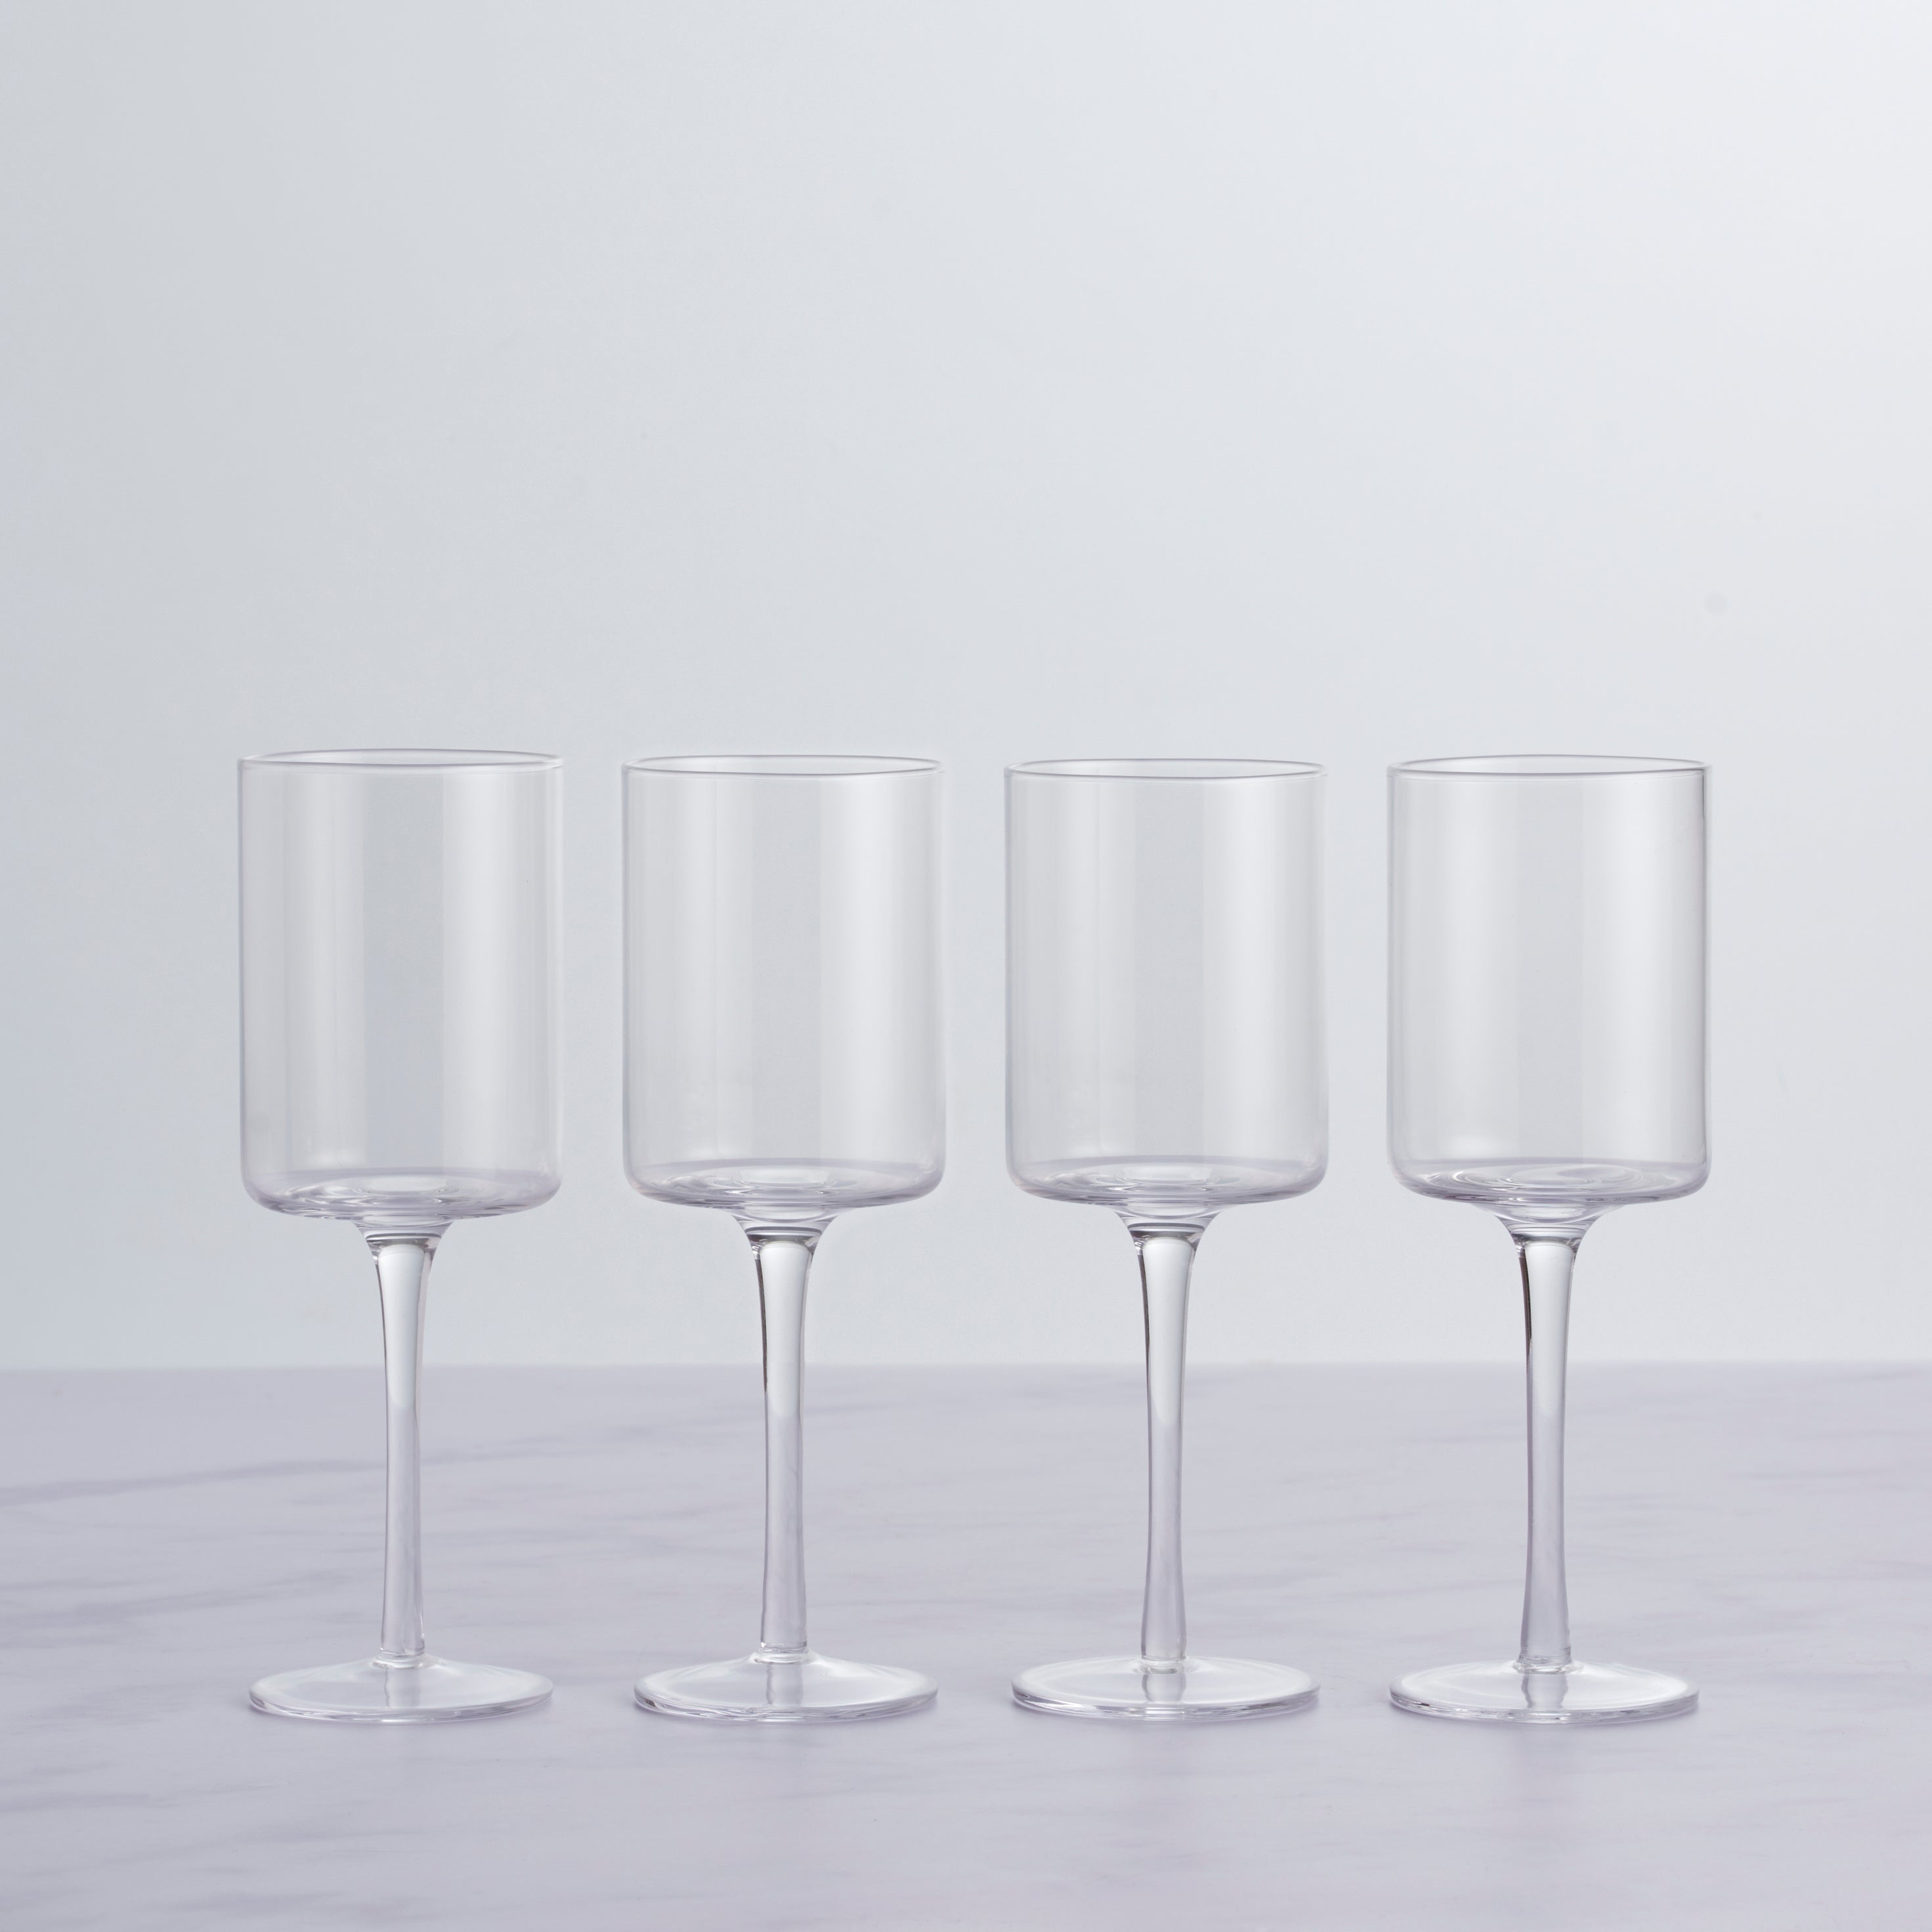 Set of 4 Mulled Wine Glasses Snowflake Designs 150ml